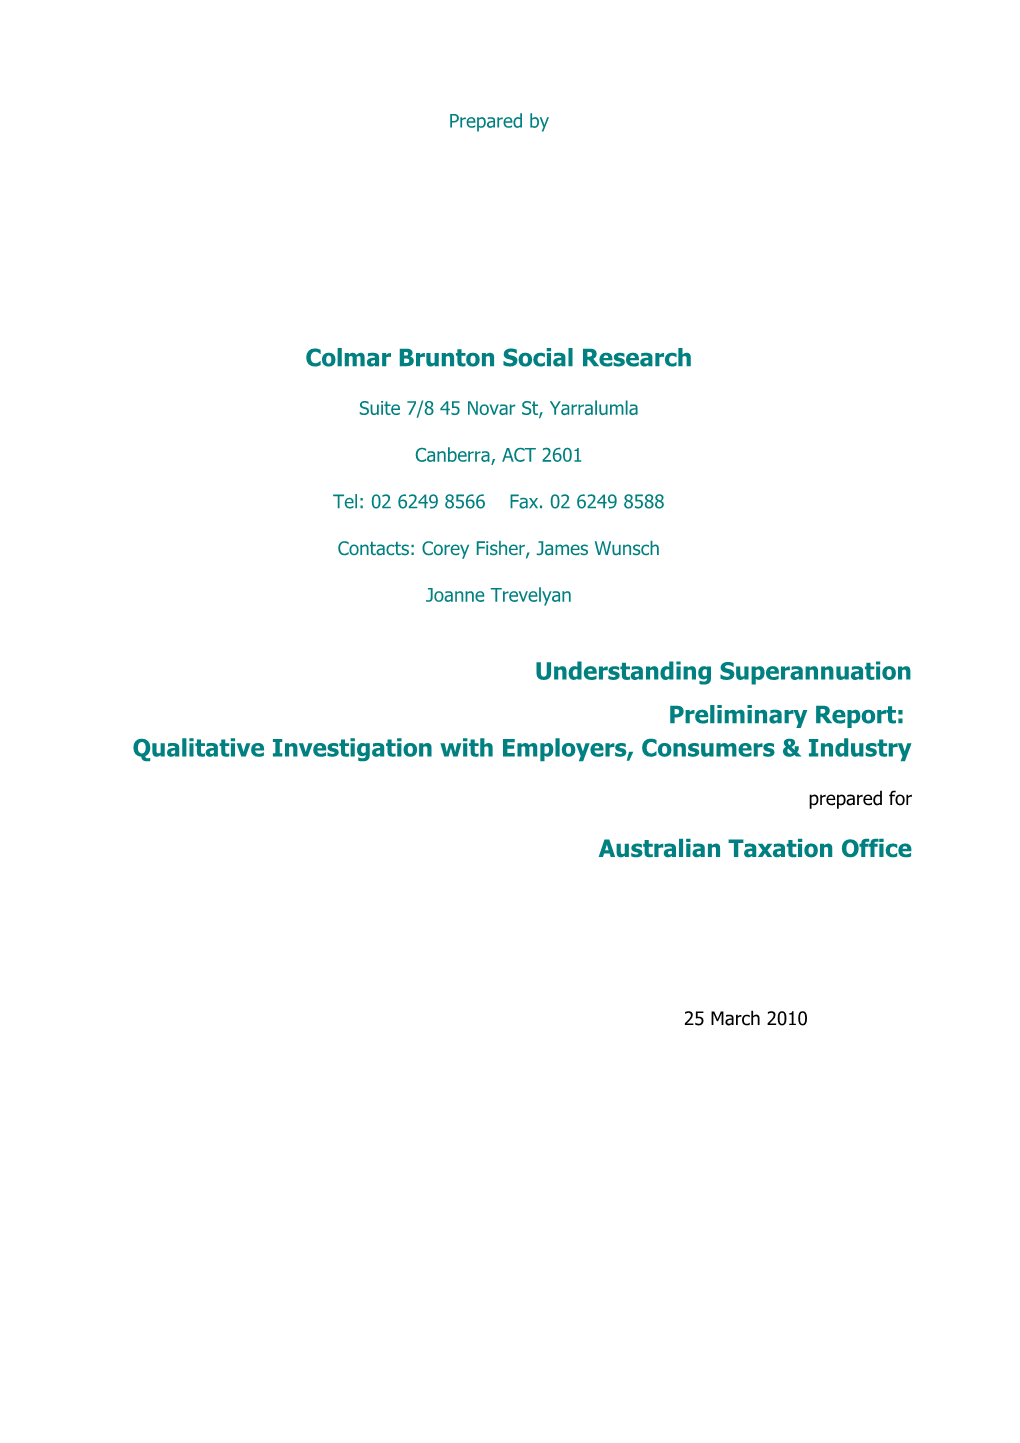 Understanding Superannuation - Preliminary Report: Qualitative Investigation with Employers